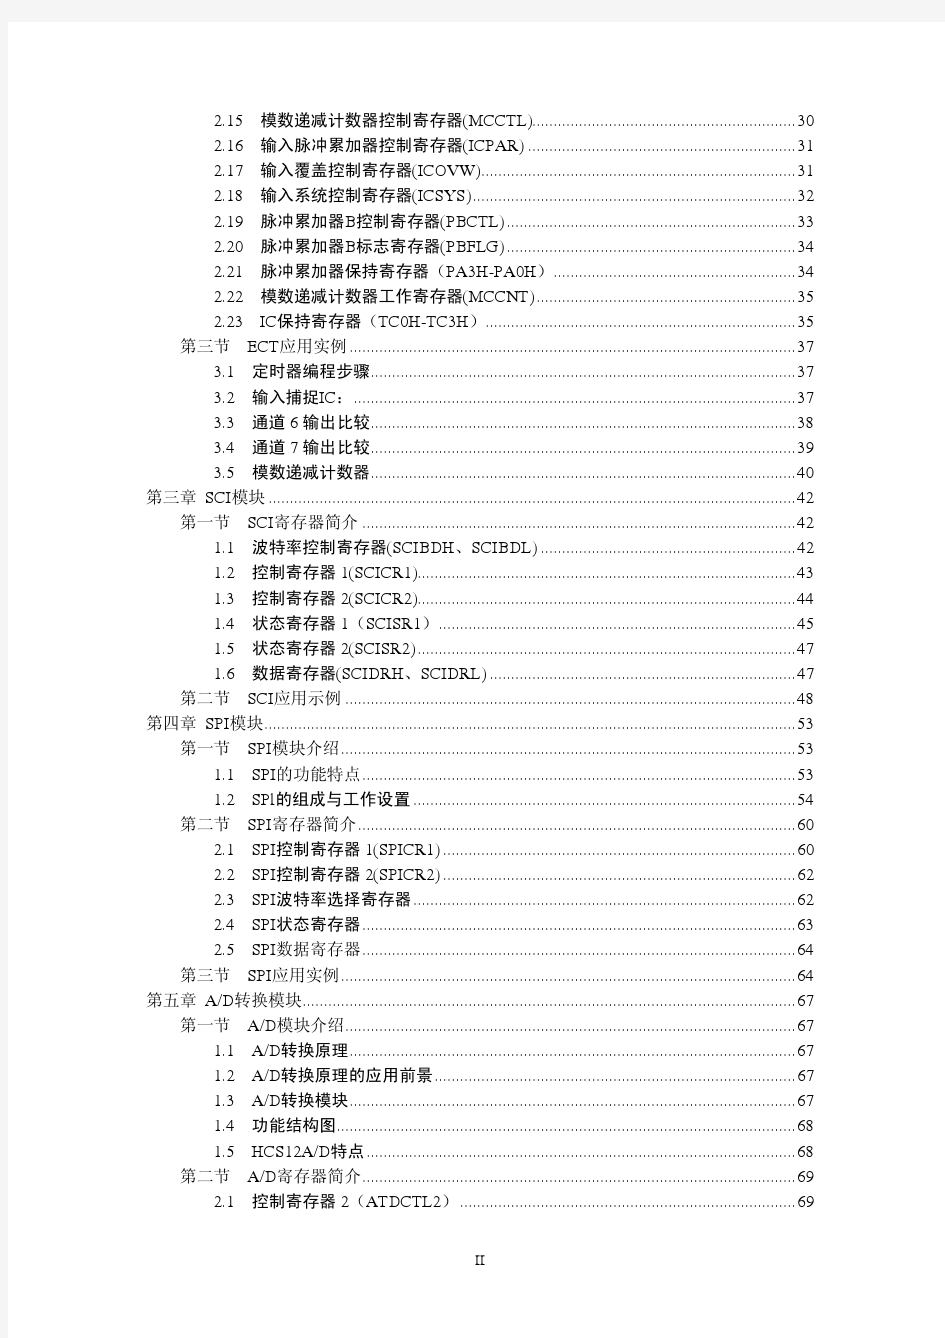 MC9S12详细中文资料